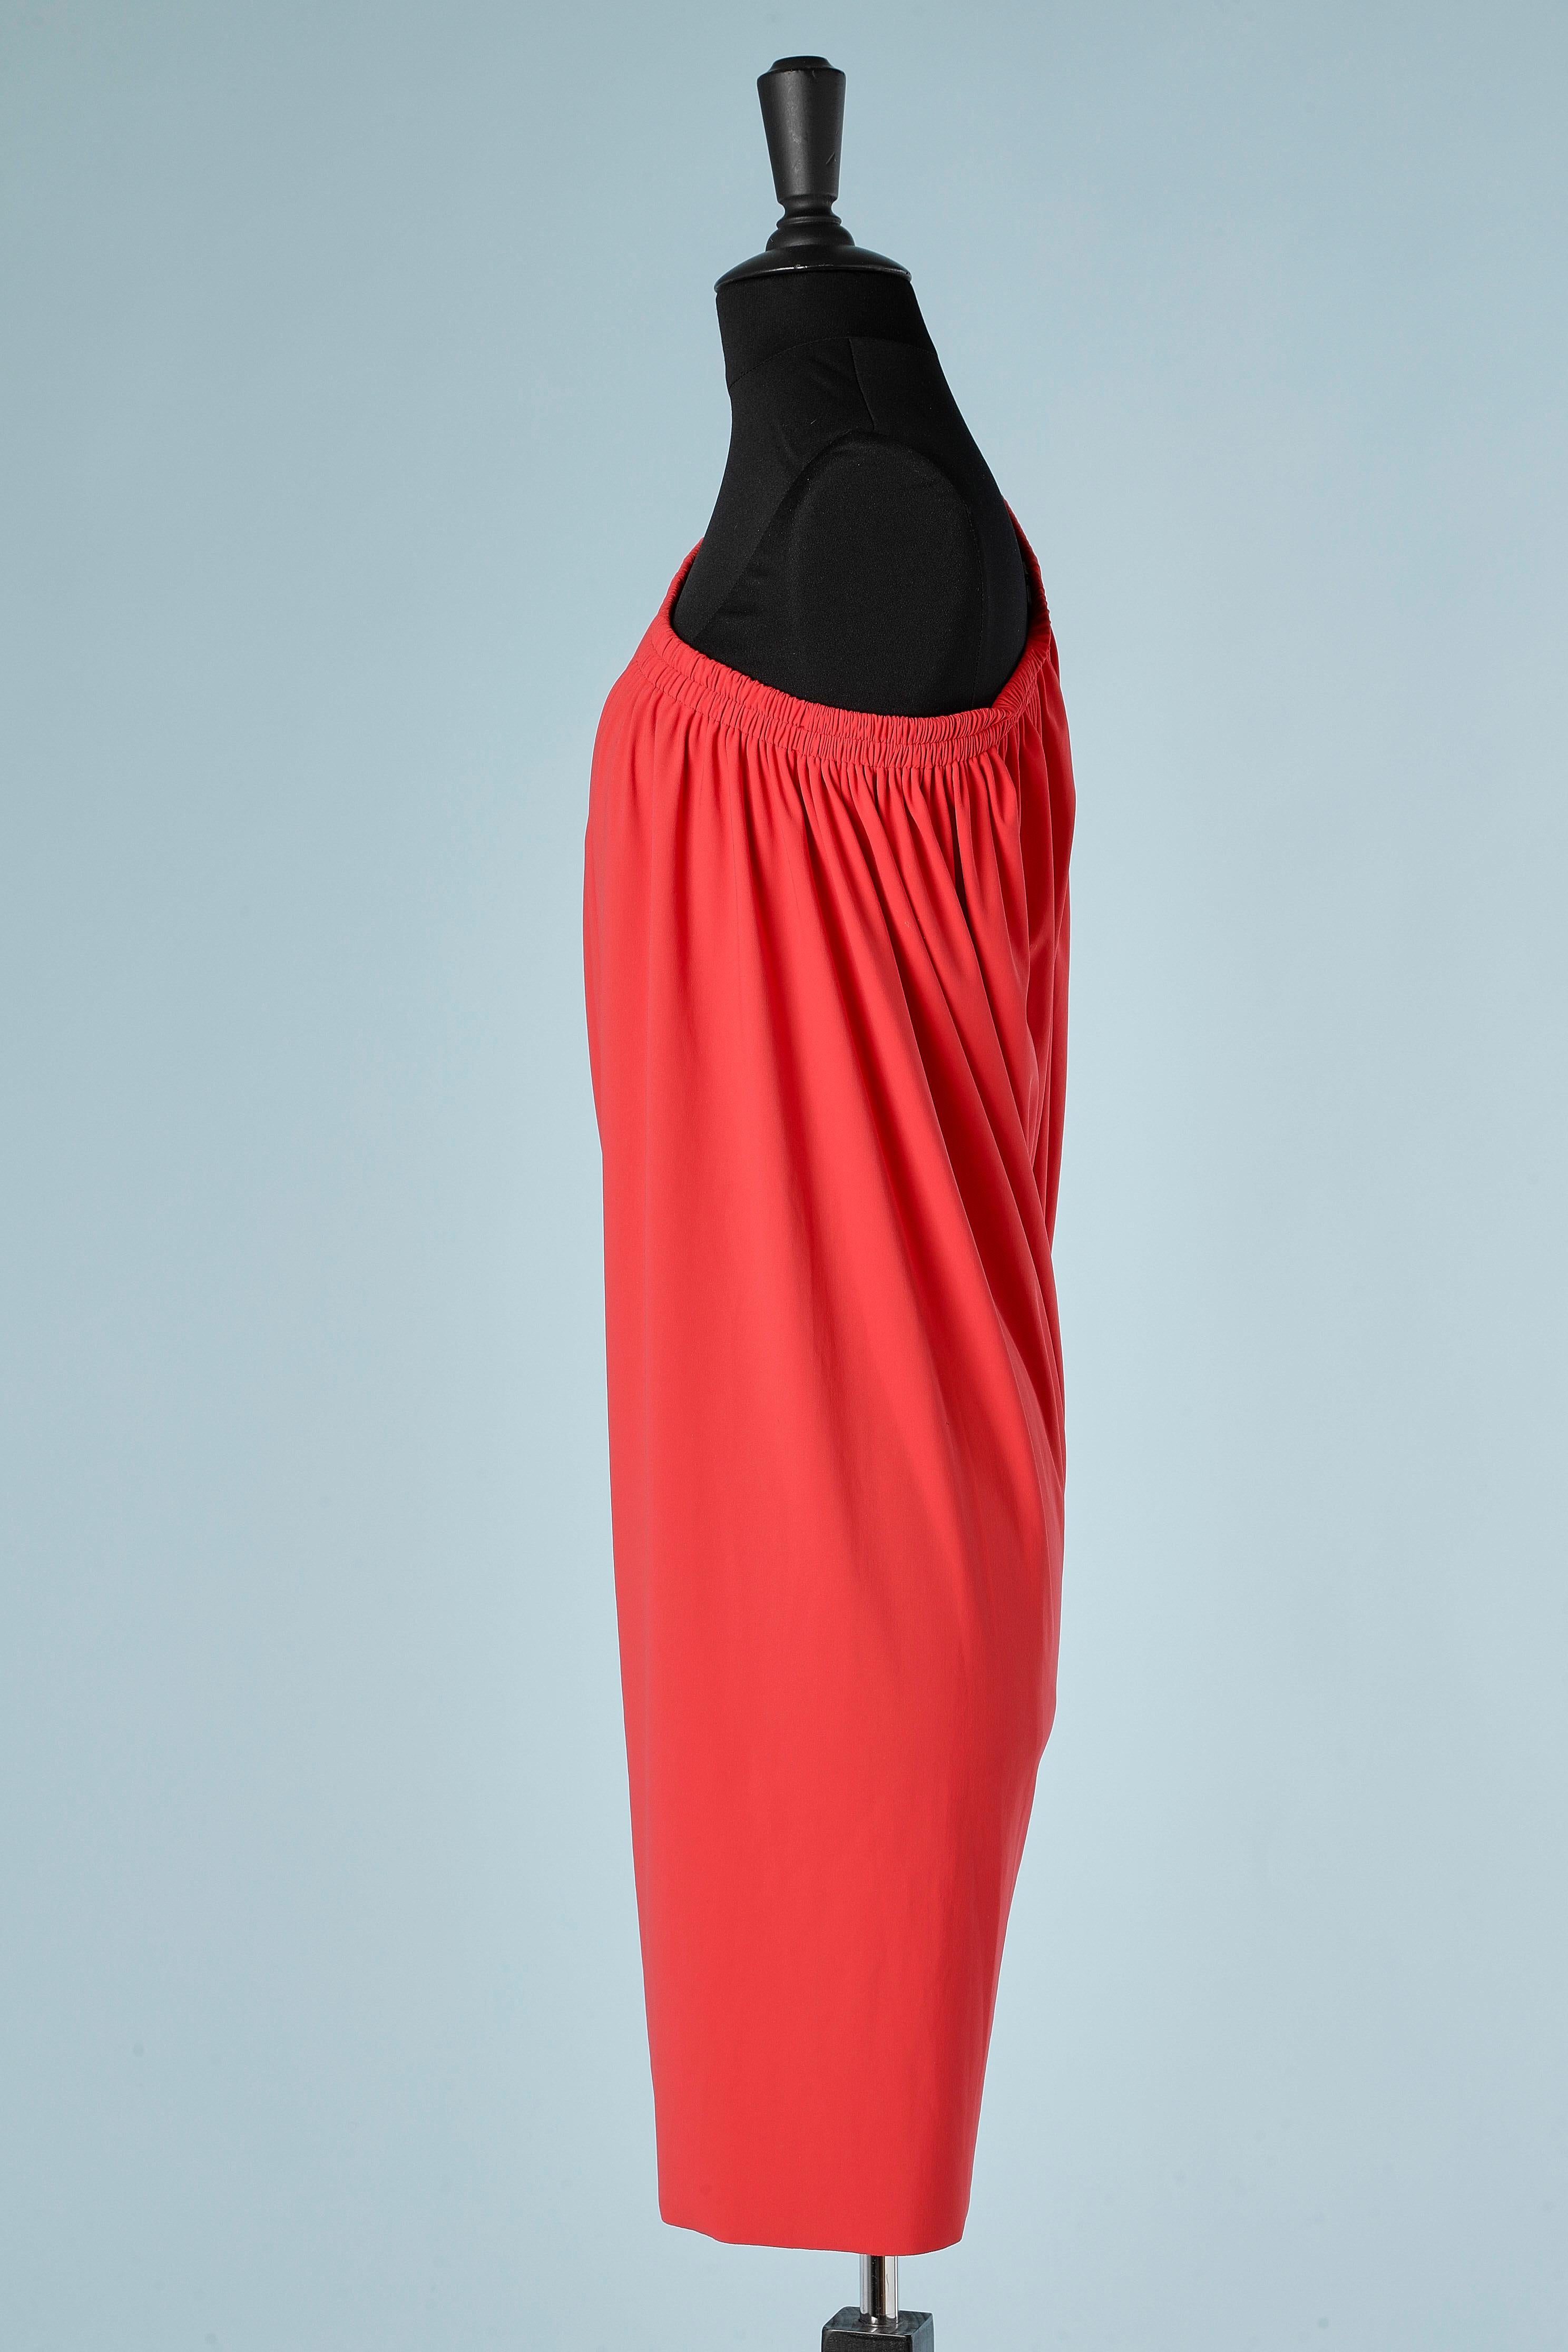 Red  asymmetrical stretch jersey top Lanvin Maillot de bain For Sale 1